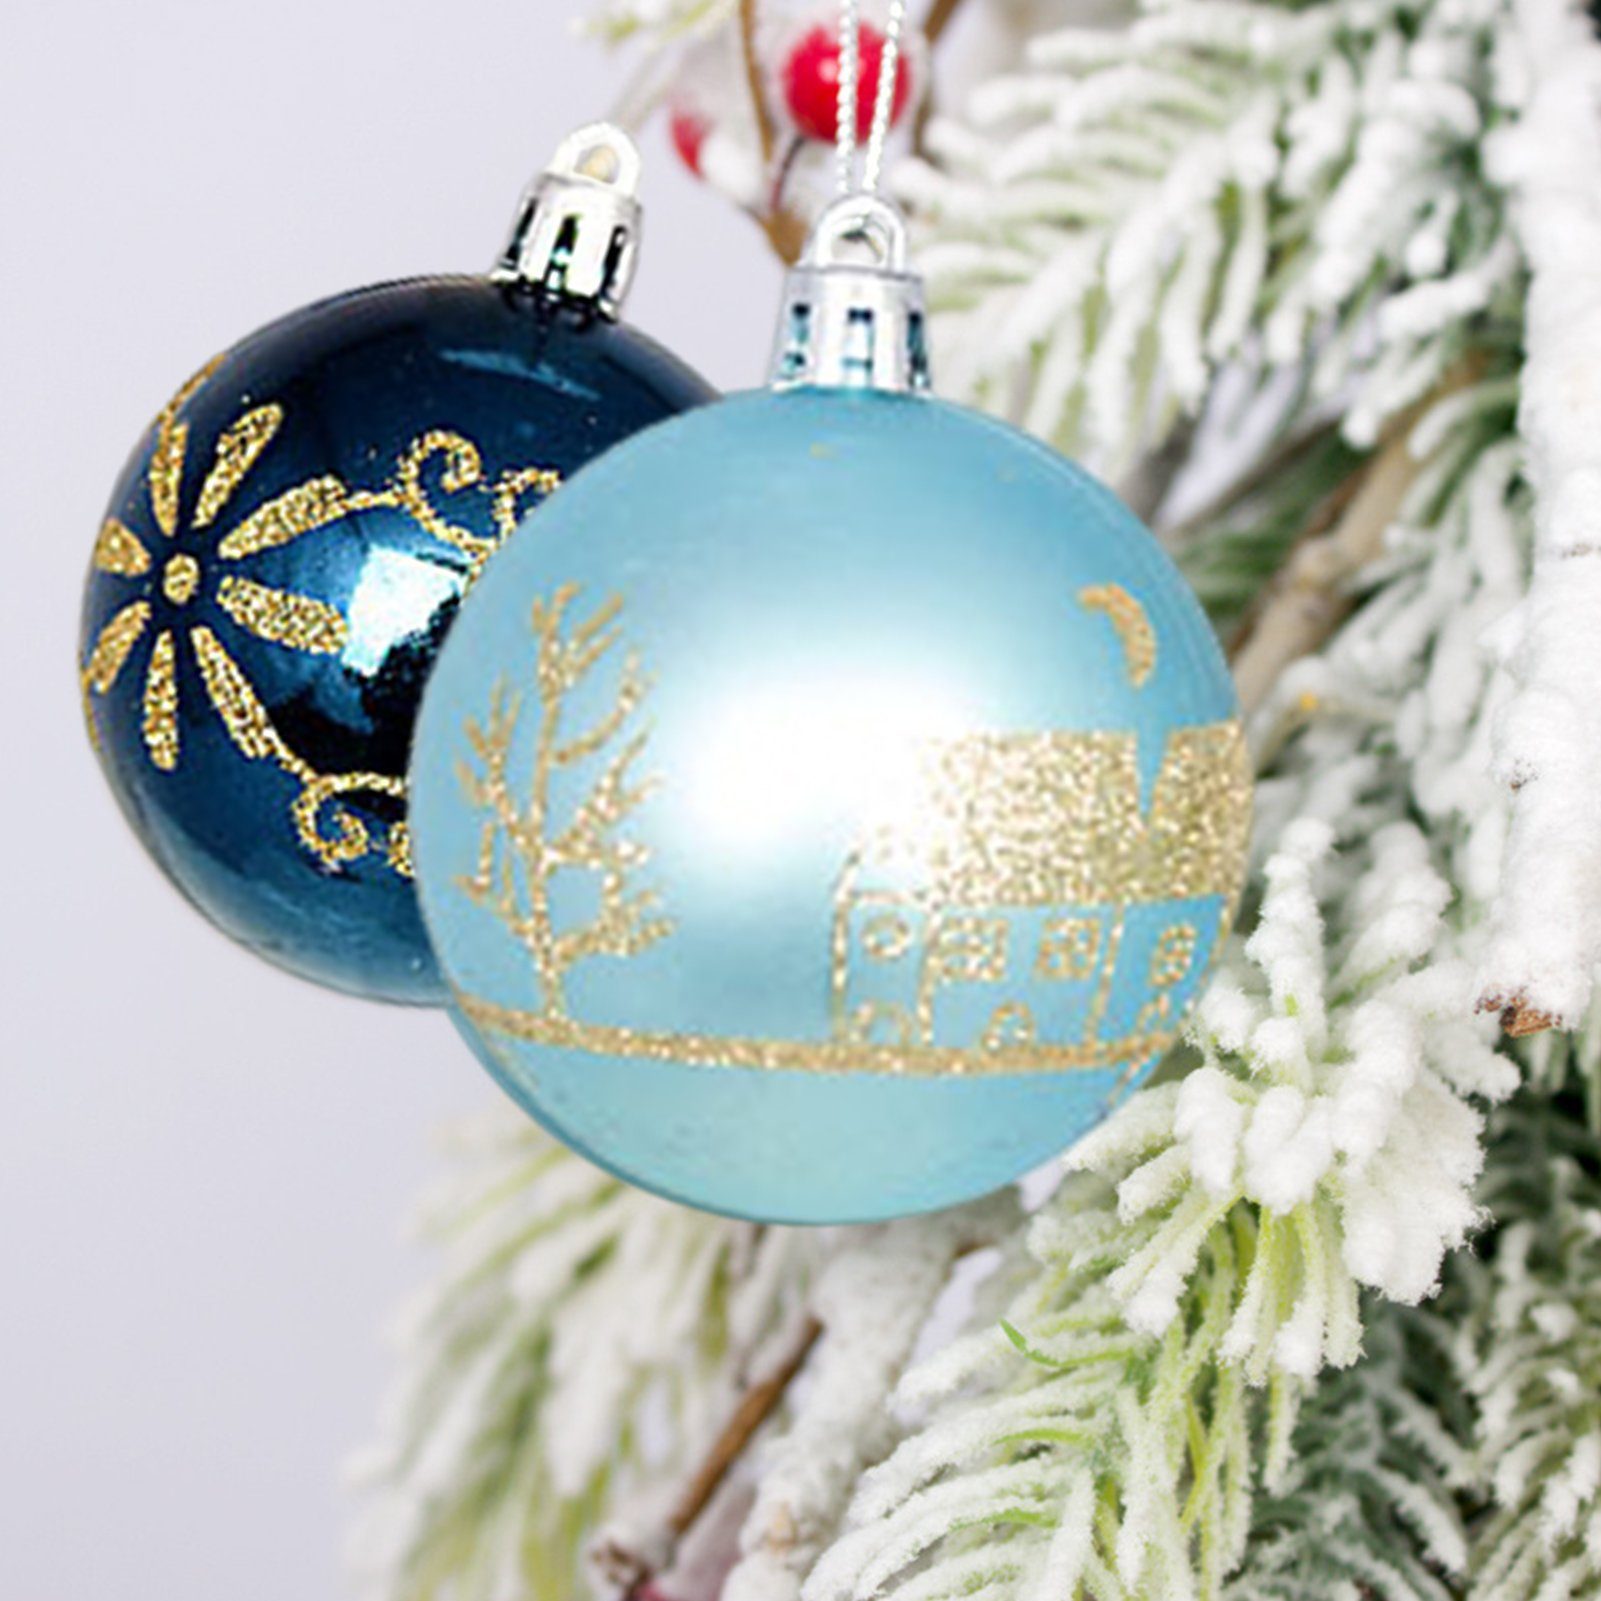 Rutaqian Weihnachtskugel 44 Weihnachtskugeln, 3-6cm Set Geschenkbox Farbkugel Weihnachtsbaumkugel Stück/Set Rot-Weiß-Weihnachtsball-Ornament, aus Plastik